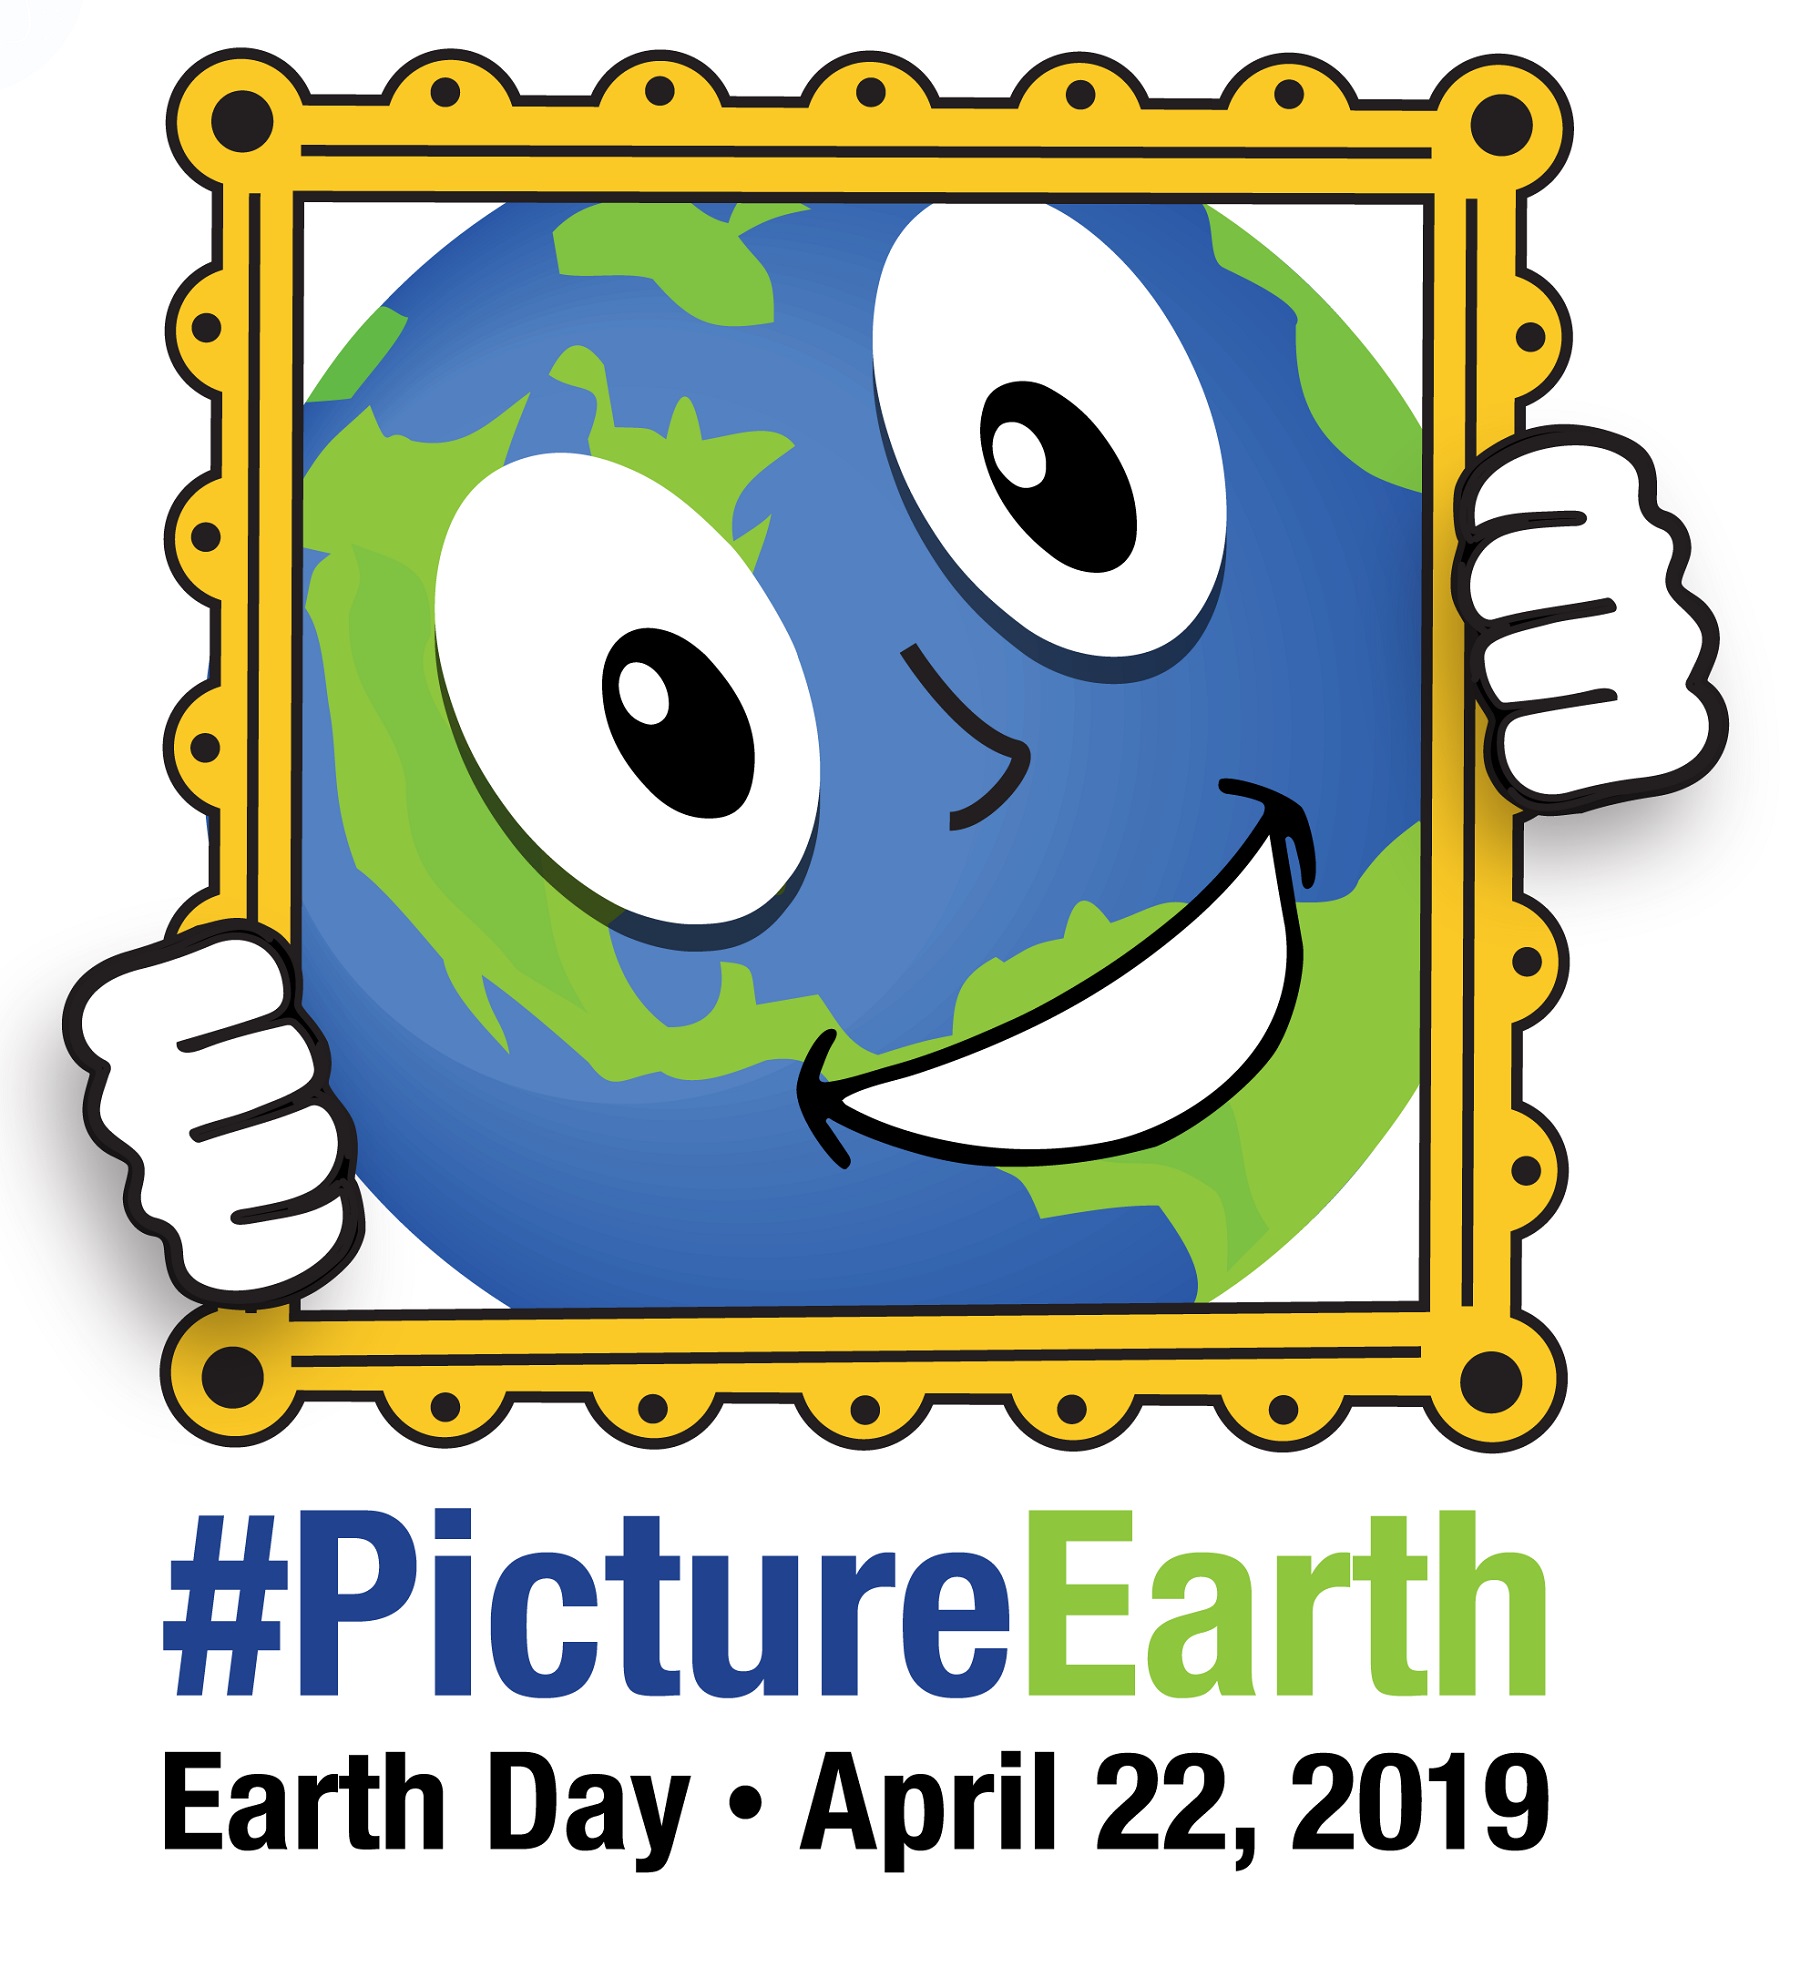 NASA celebrates Earth Day 2019 with #PictureEarth, April 22, 2019.